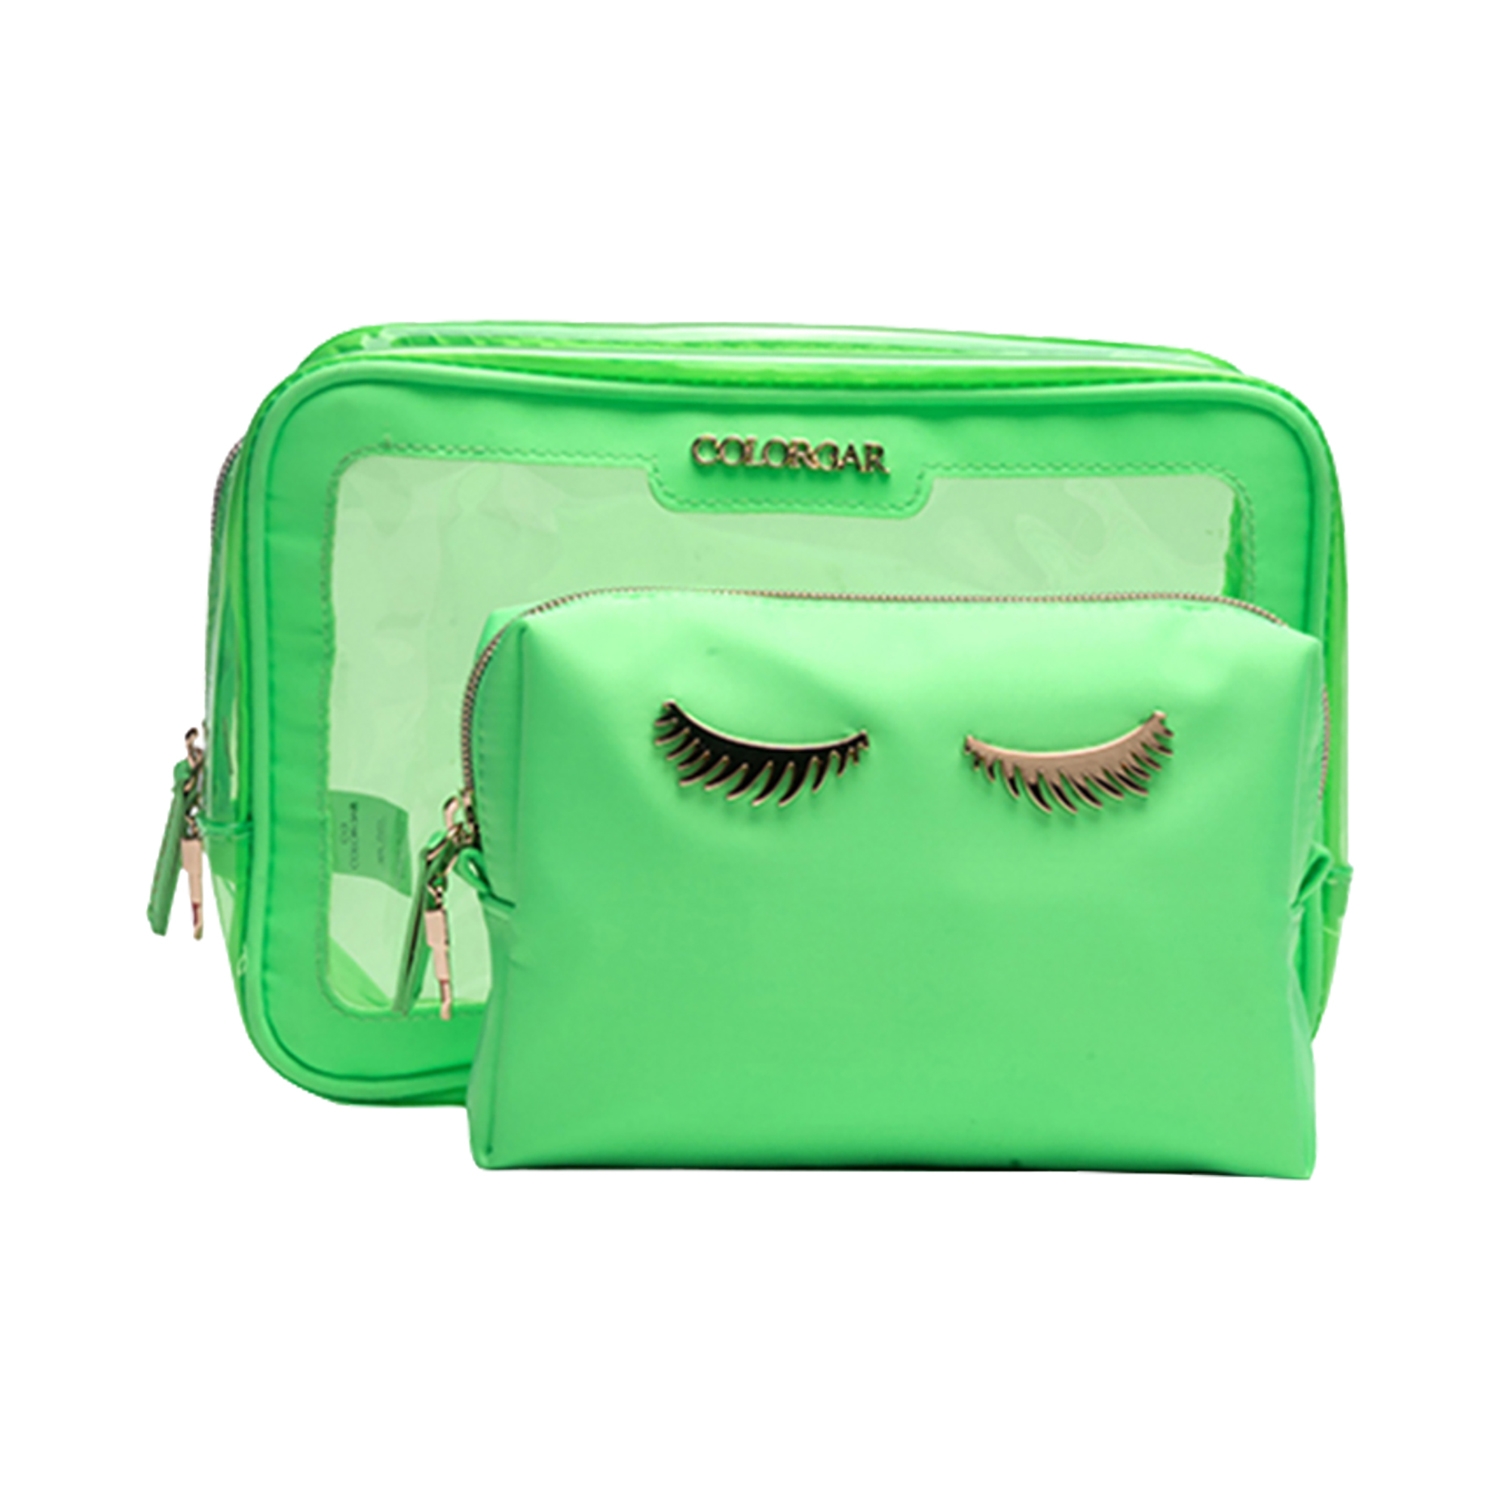 Colorbar | Colorbar Lips & Lashes Box Pouch - Neon Green (2Pcs)